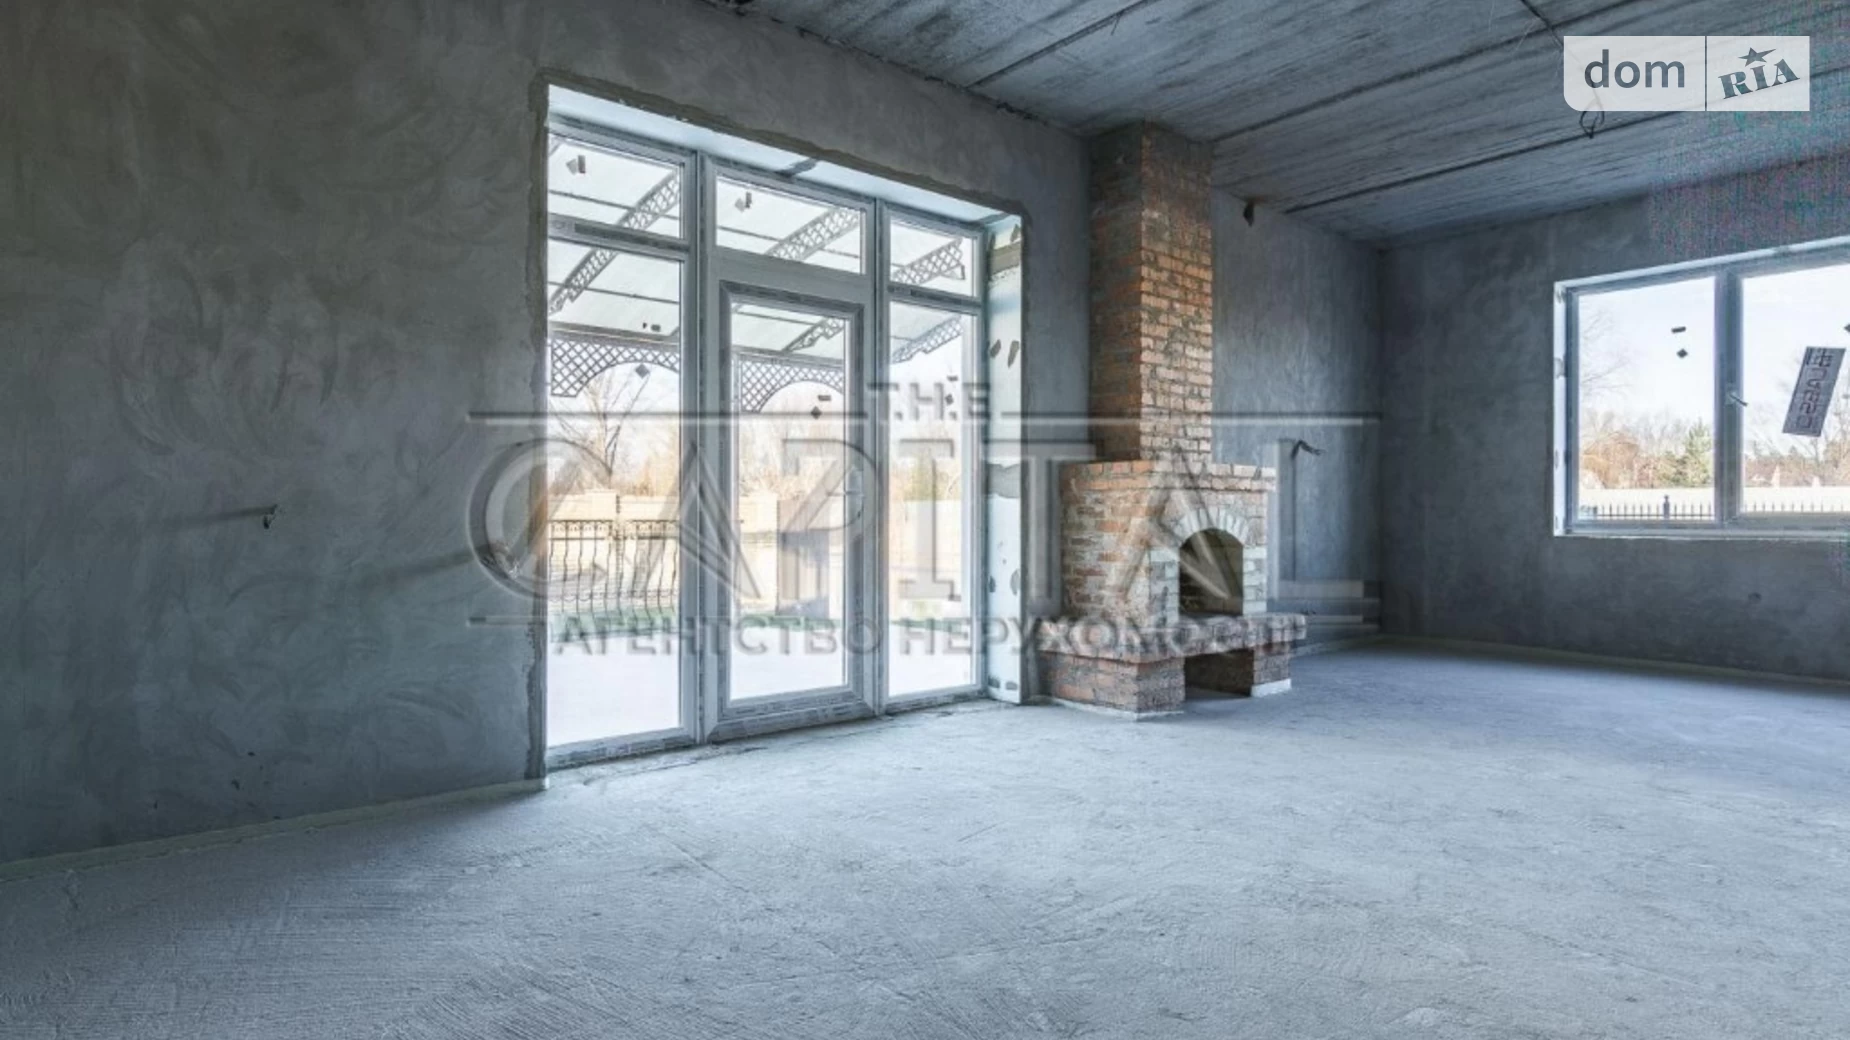 Продается дом на 2 этажа 165 кв. м с камином, Романків - фото 3